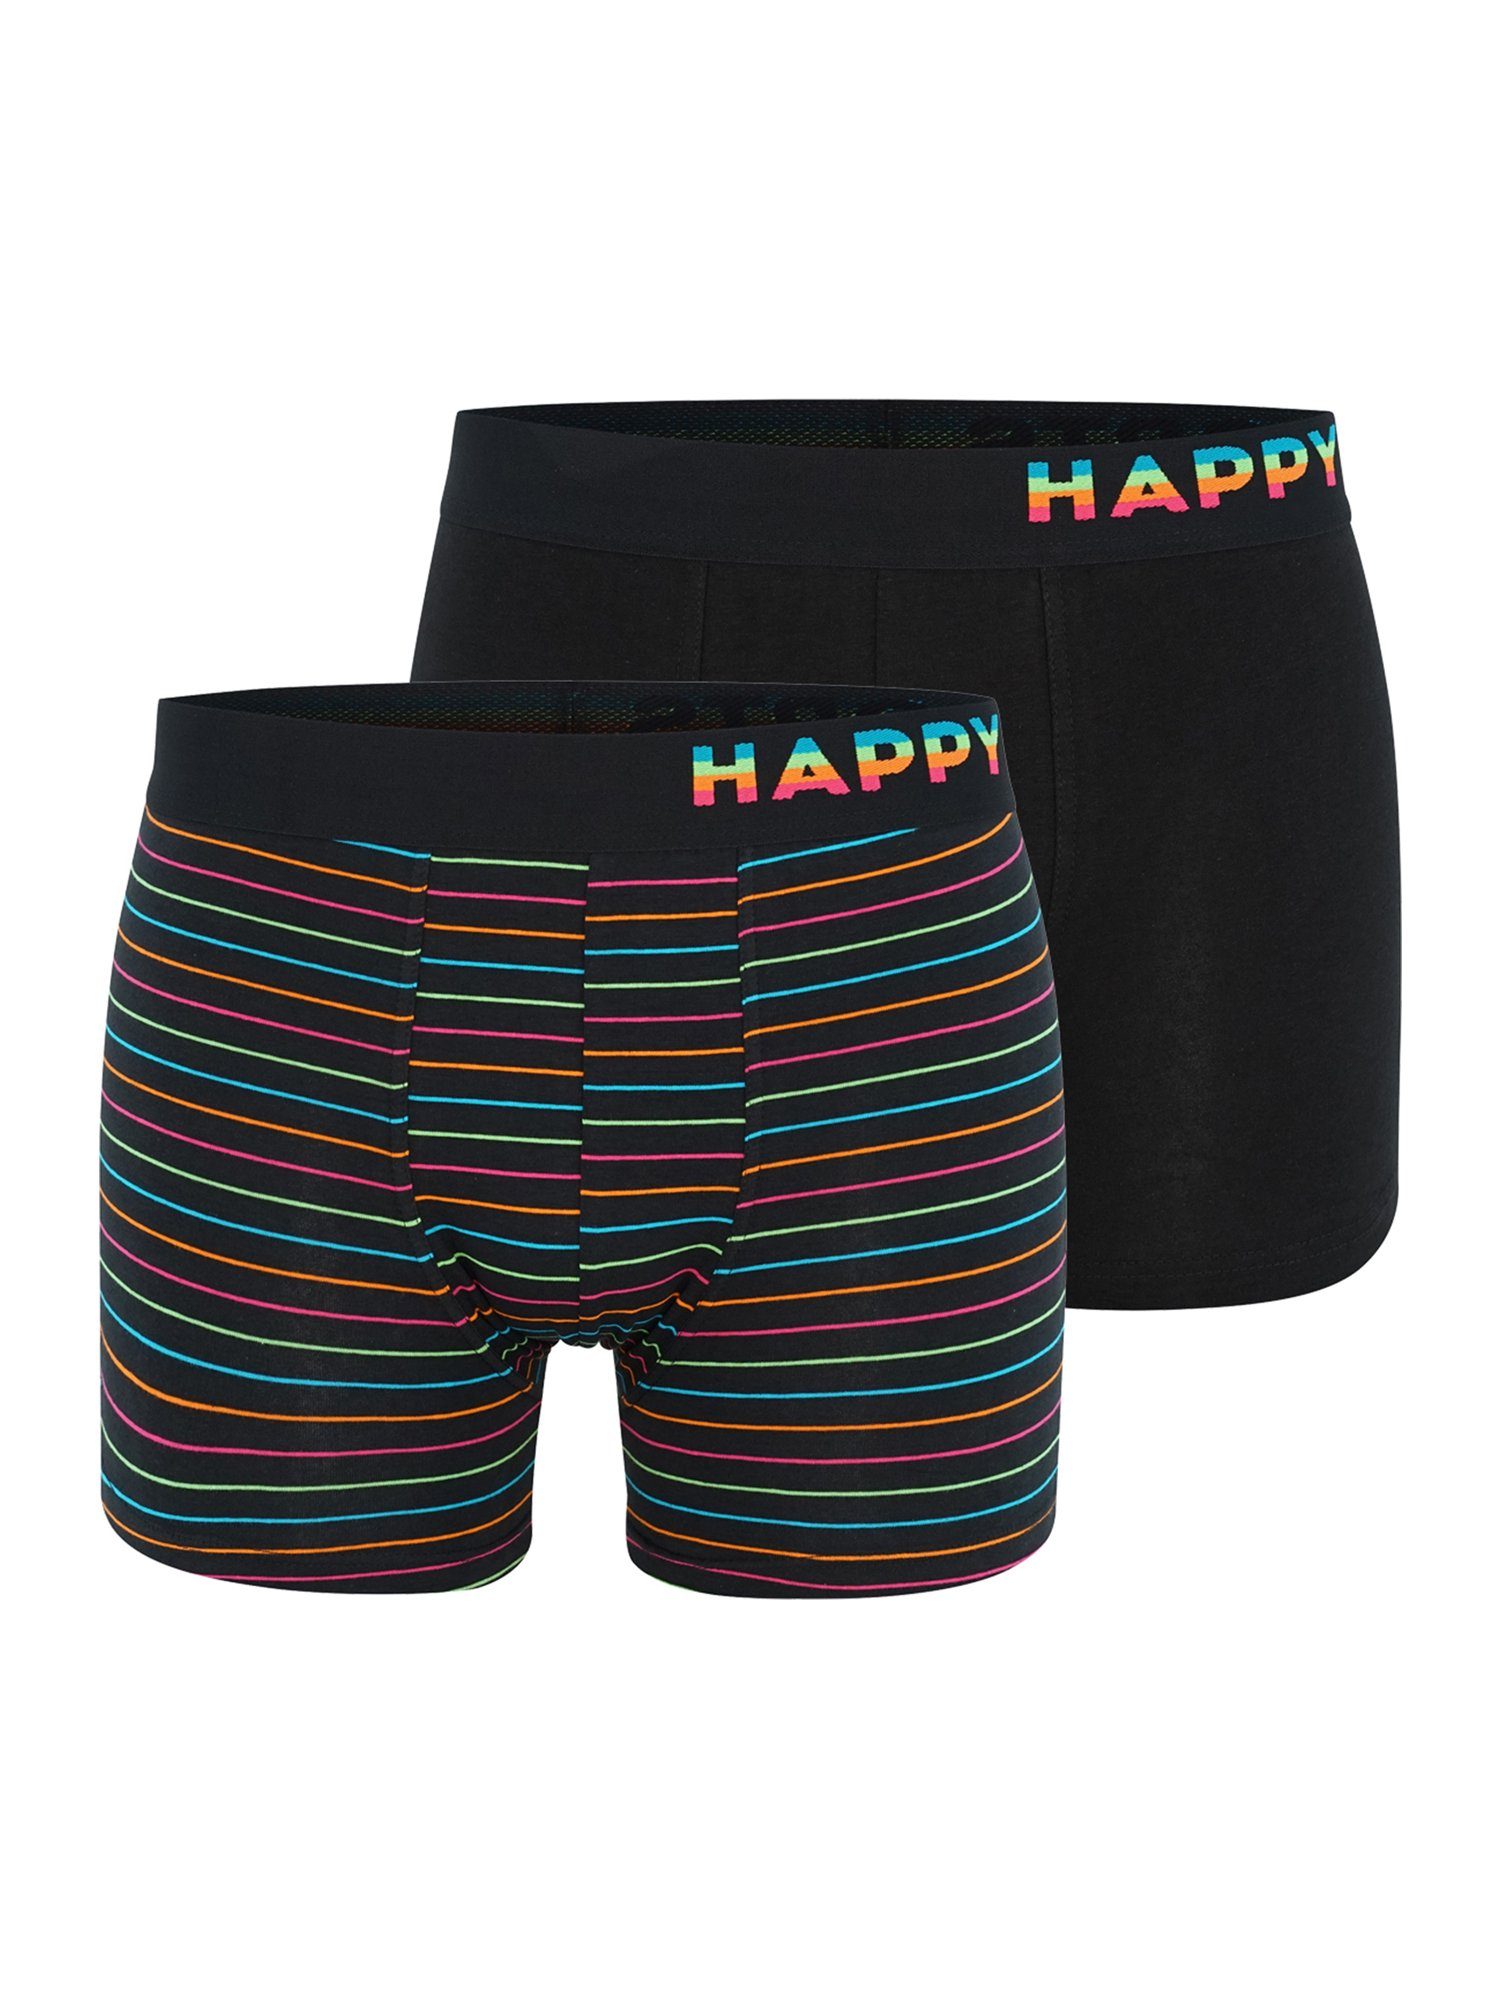 HAPPY SHORTS Retro Pants Motivprint Trunks Rainbow Stripes